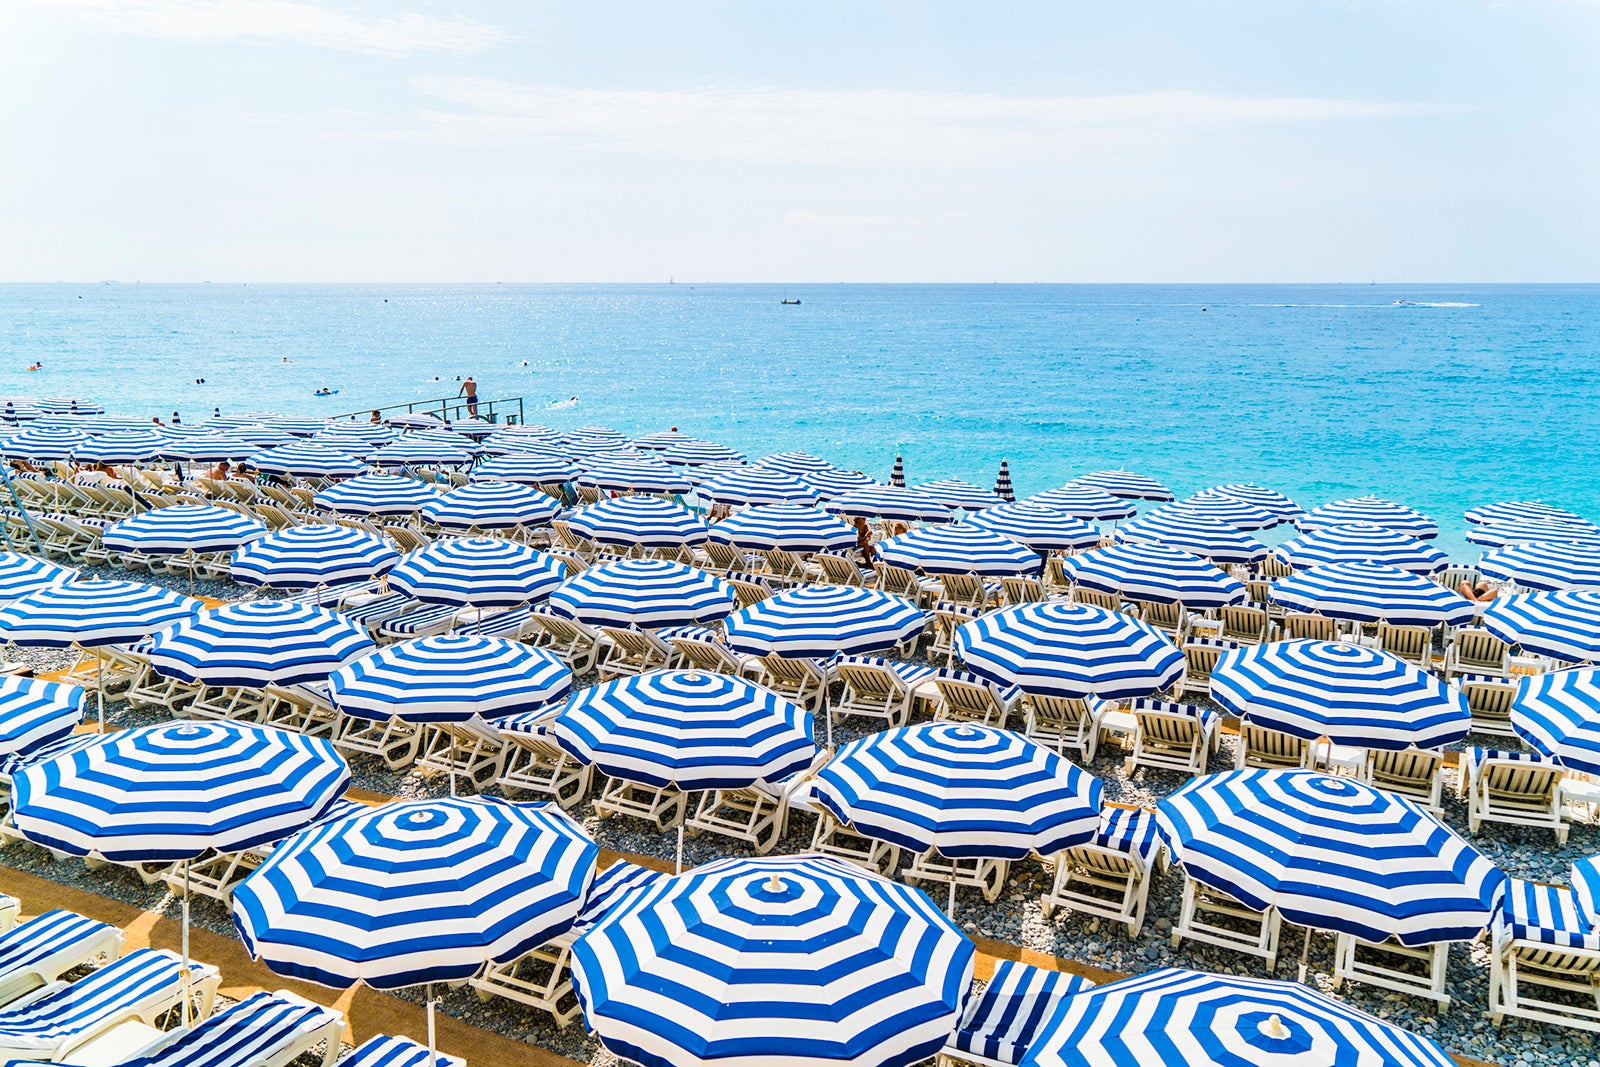 Rows of blue and white striped umbrellas line a beach